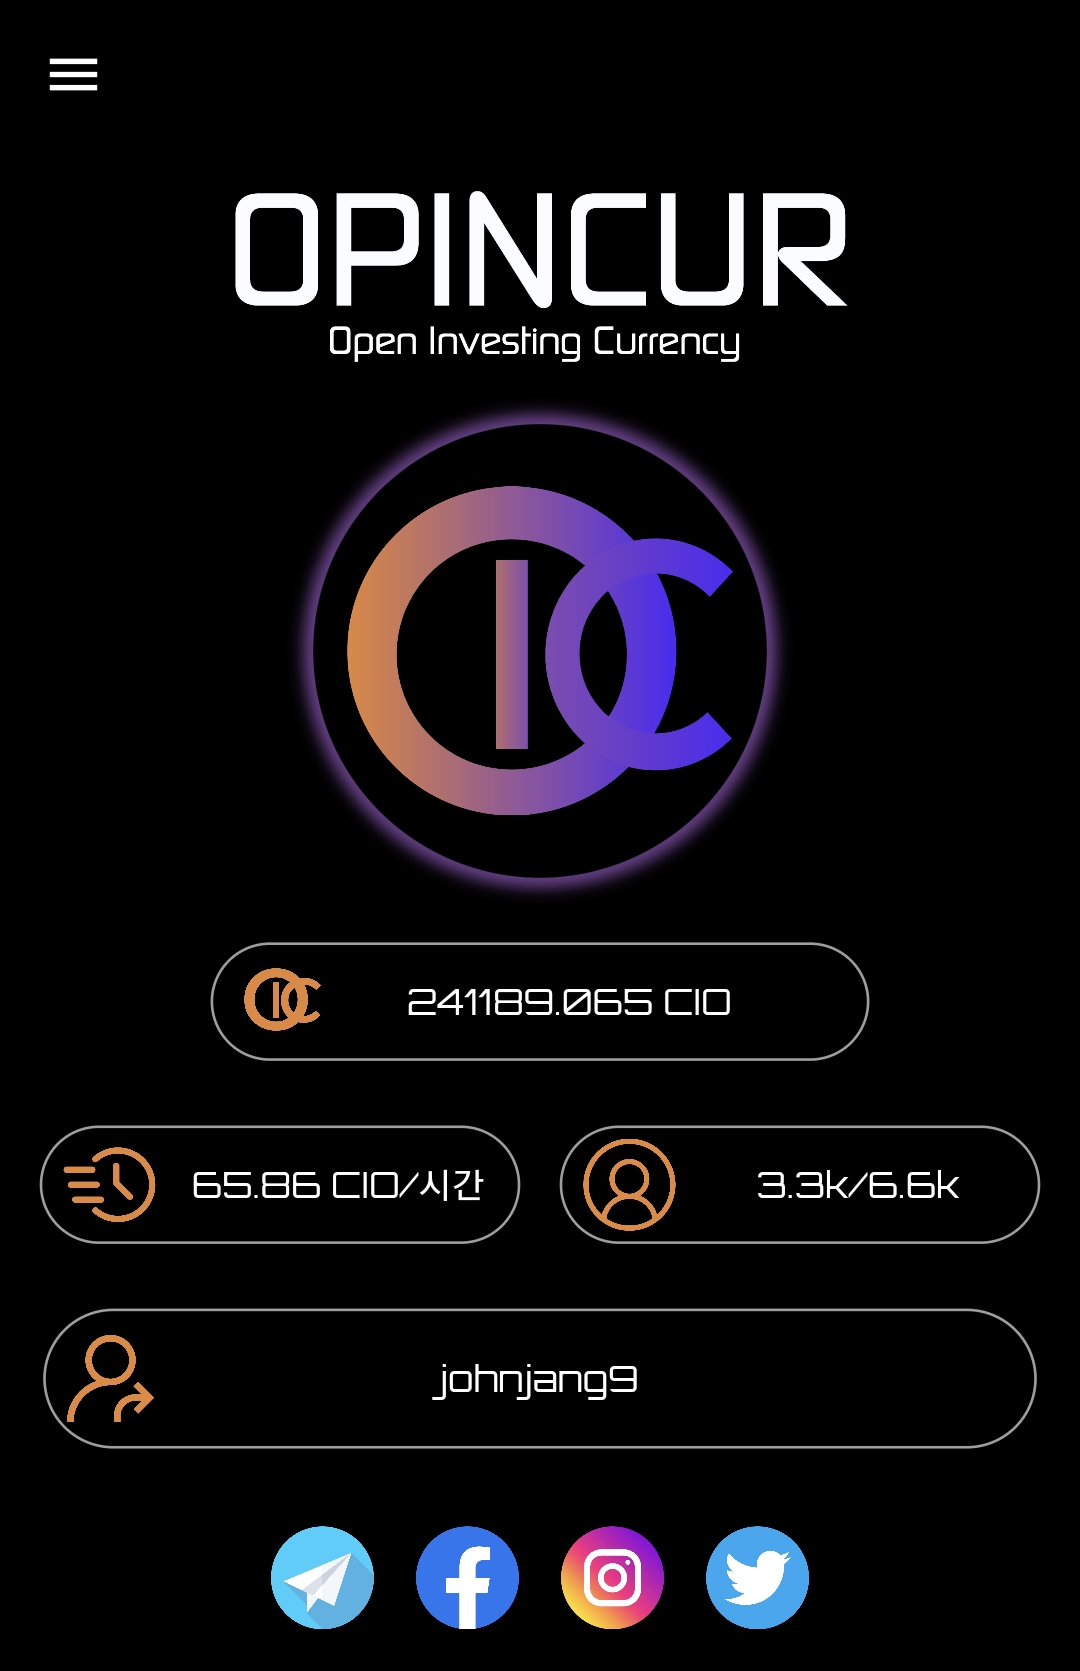 Opincur CIO মাইনিং পৃষ্ঠা